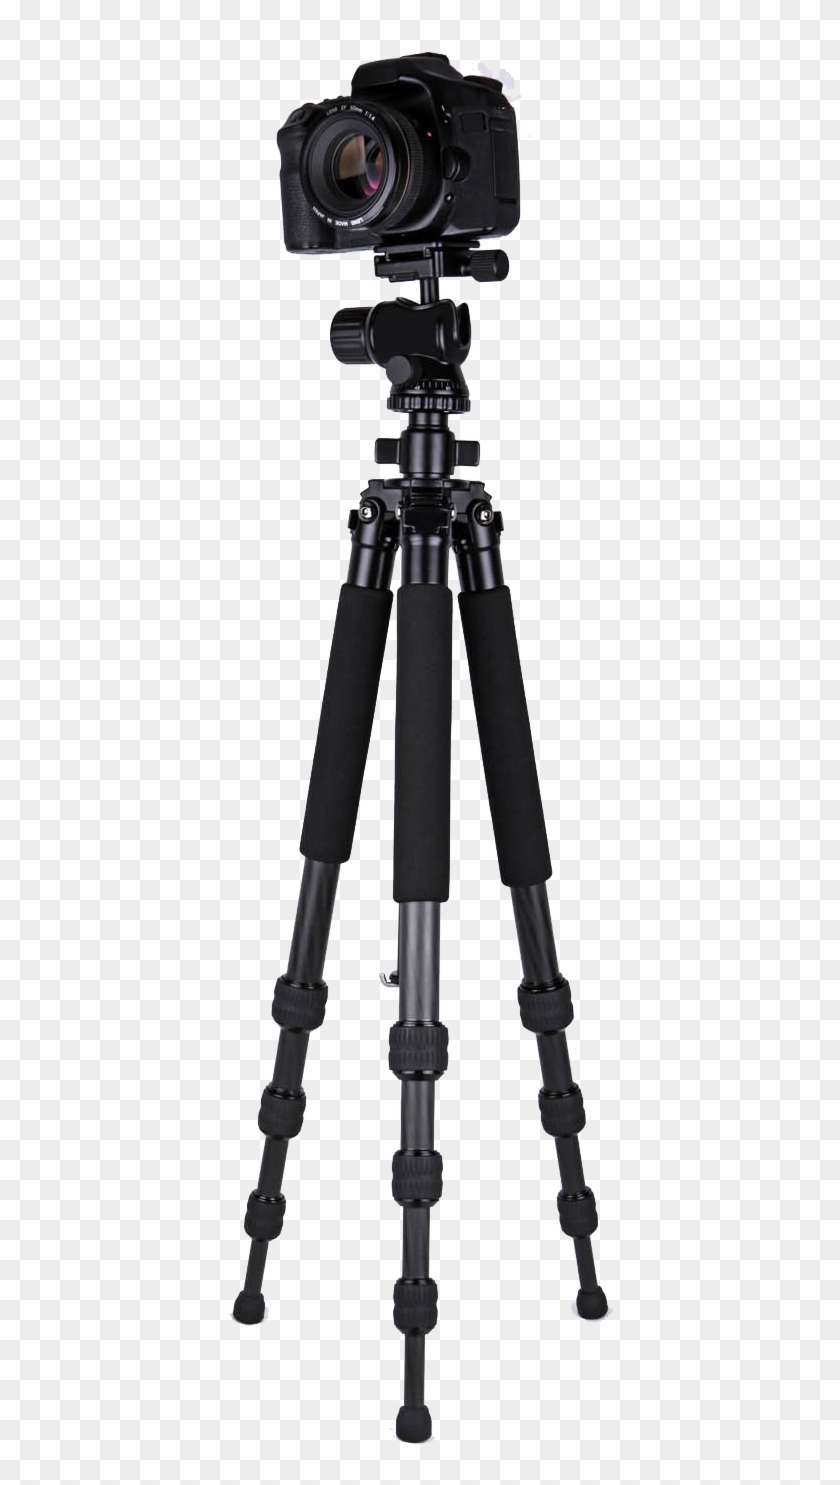 Video Camera Tripod Png Image - Video Camera On Tripod Png #997469